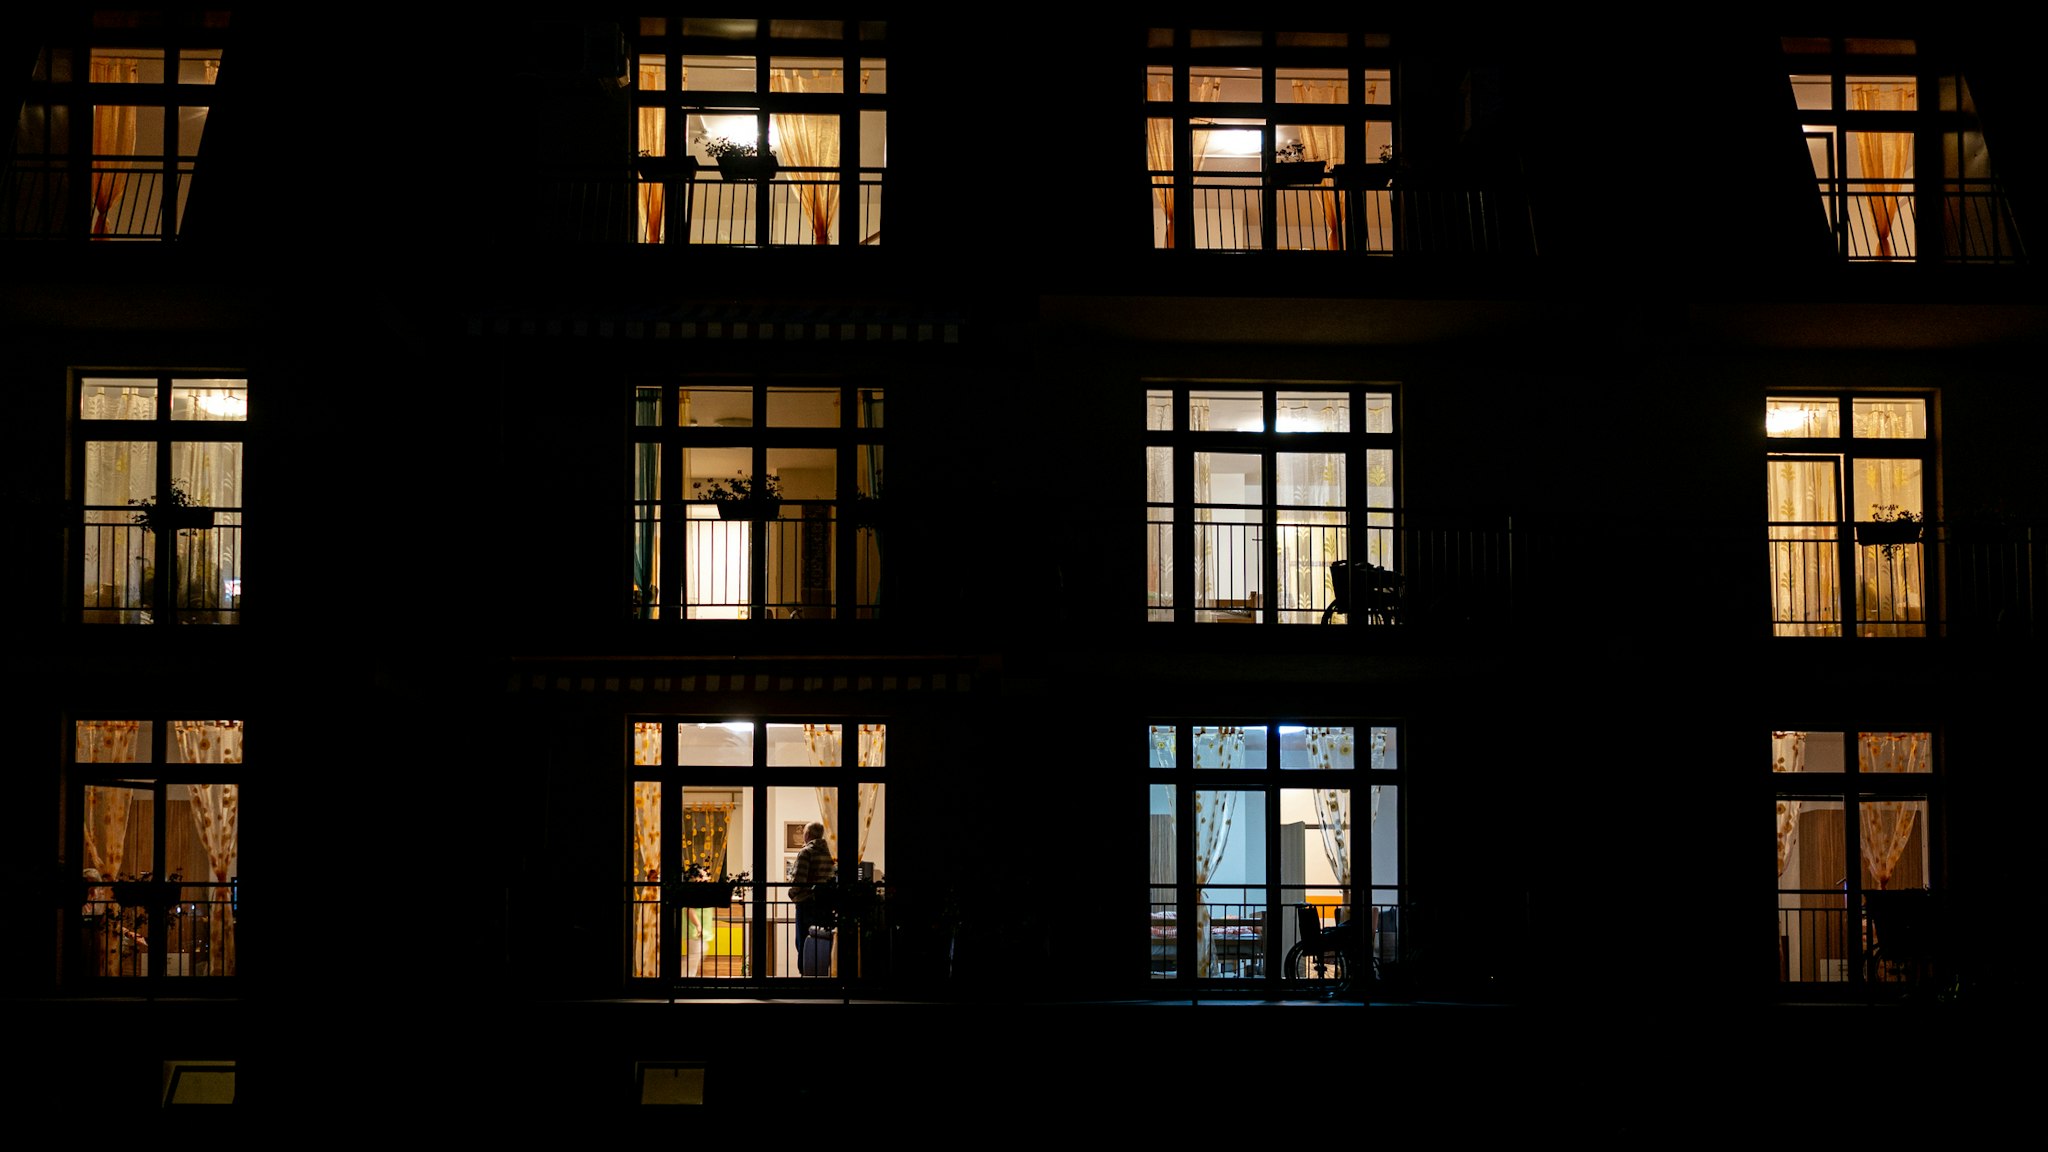 Illuminated windows of night house with people inside - stock photo